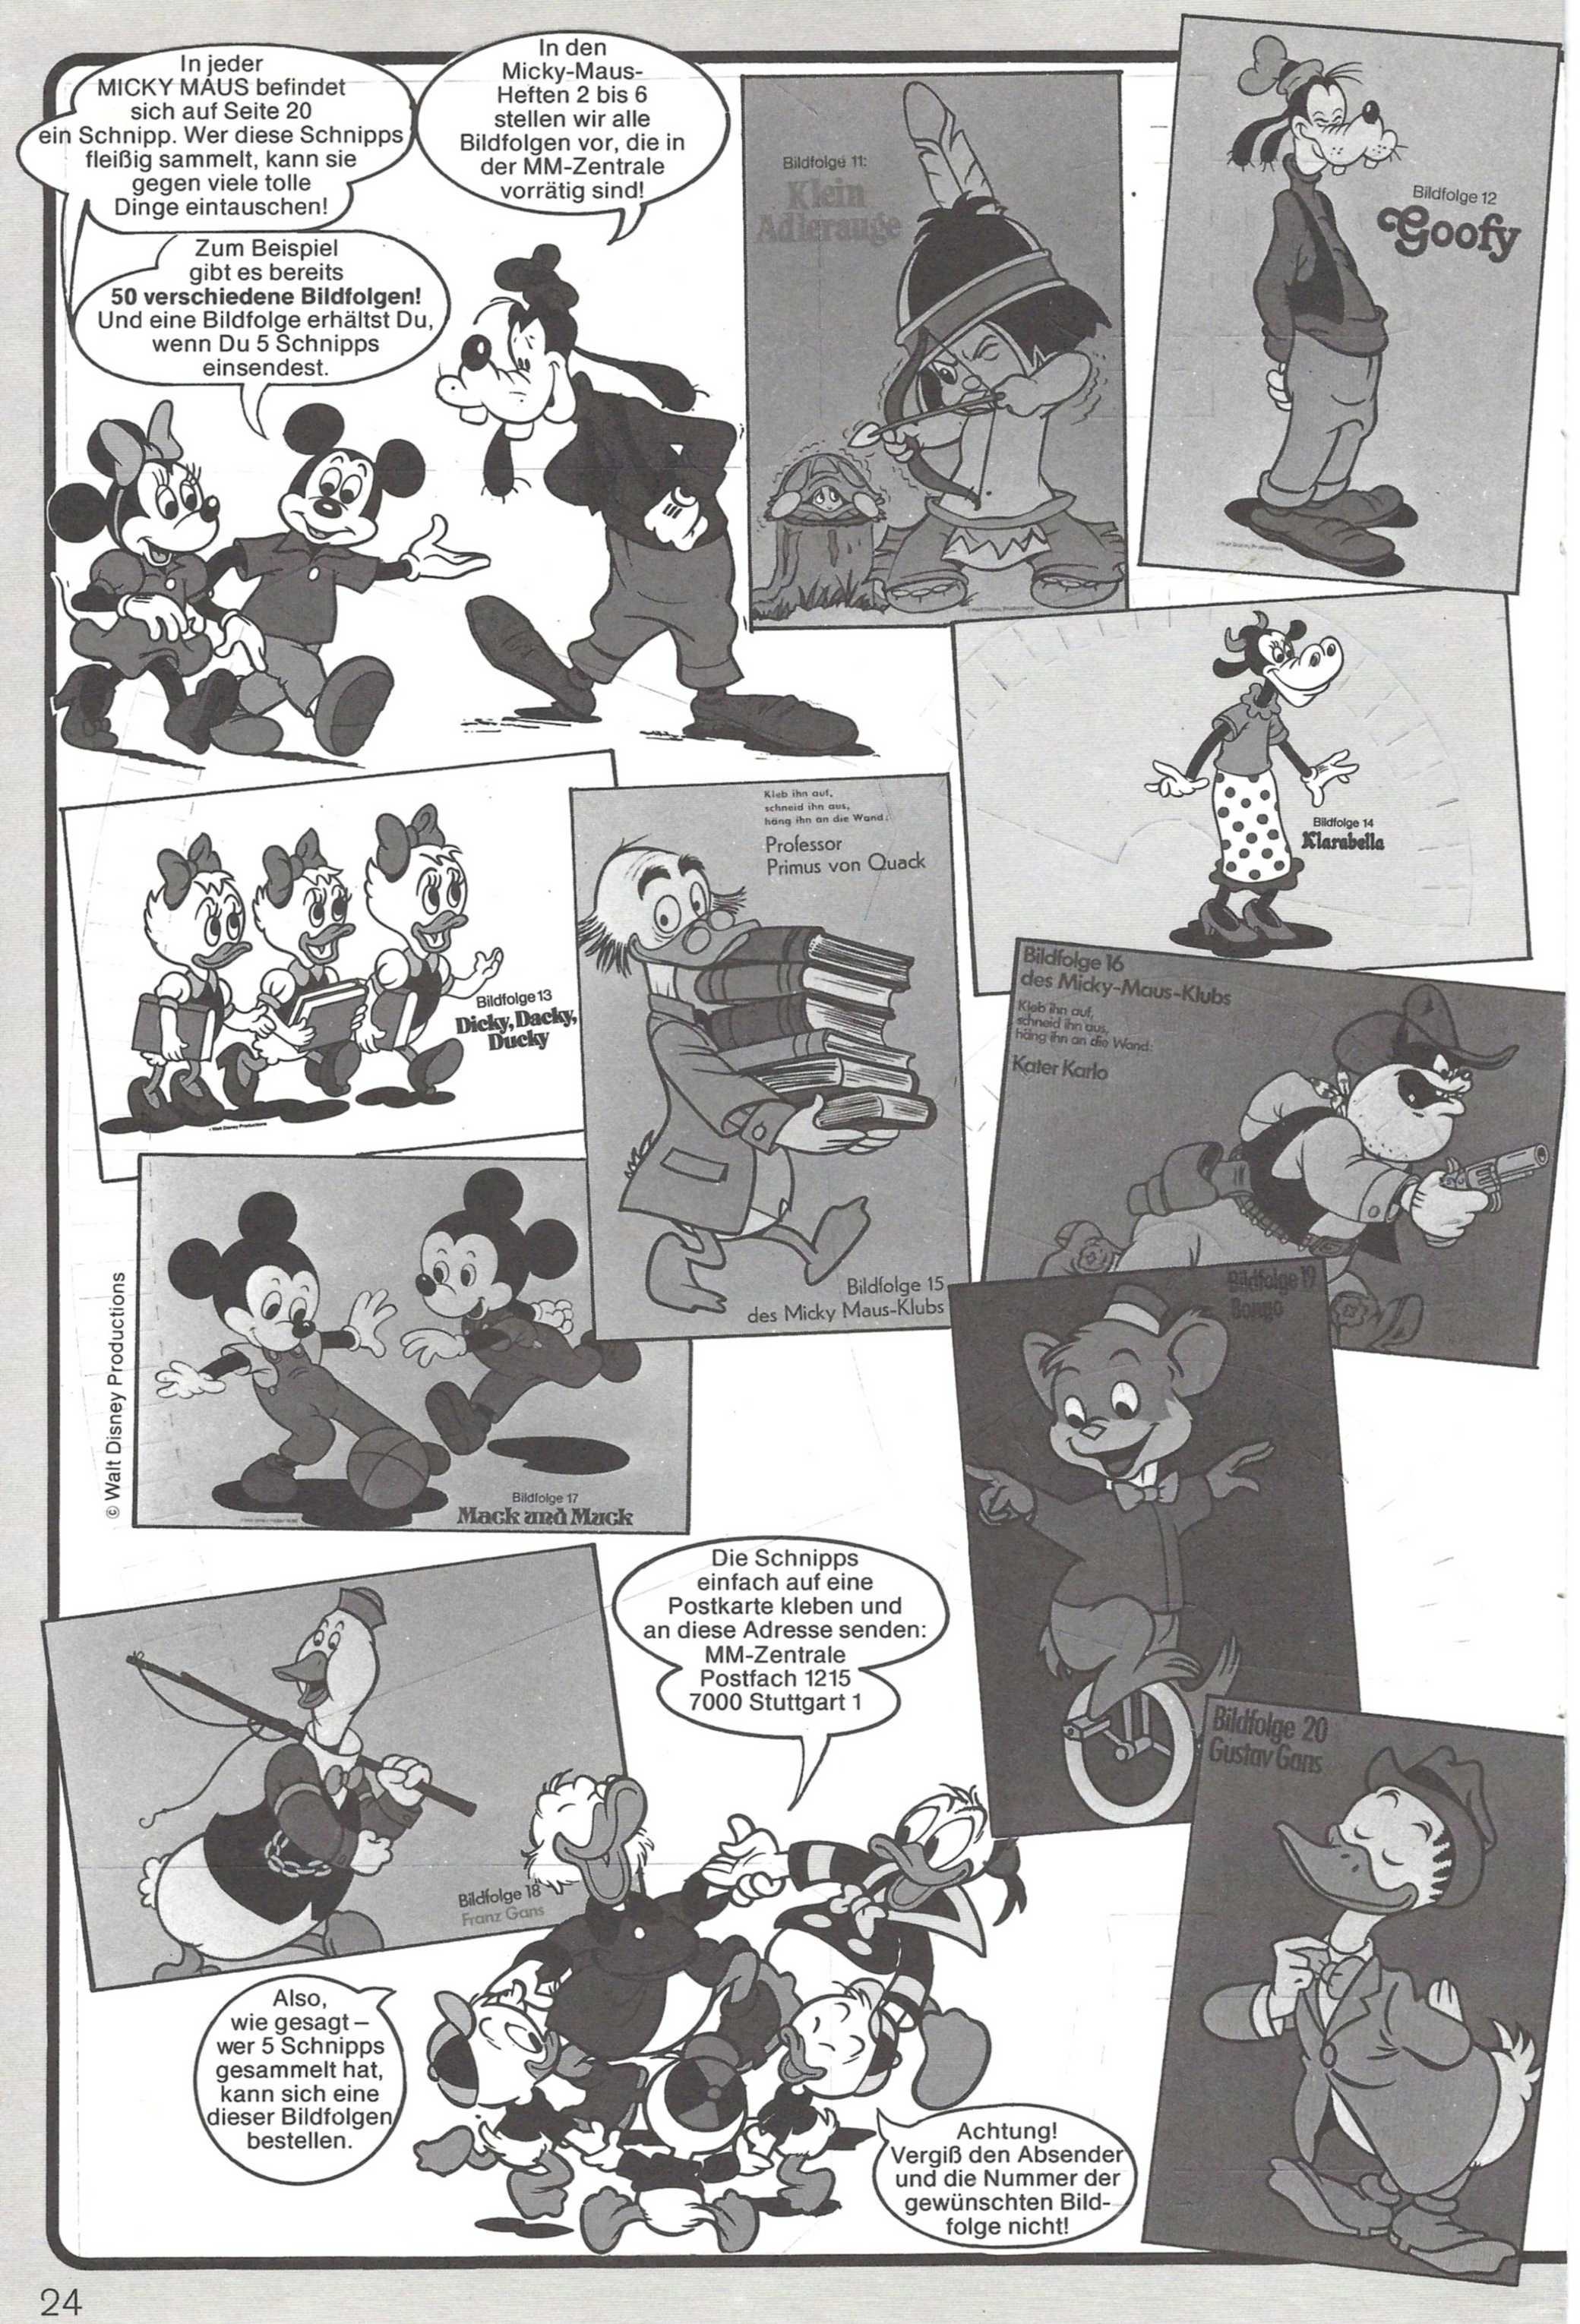 Mickey Mouse German Book Micky Maus Zauberer Merlin 